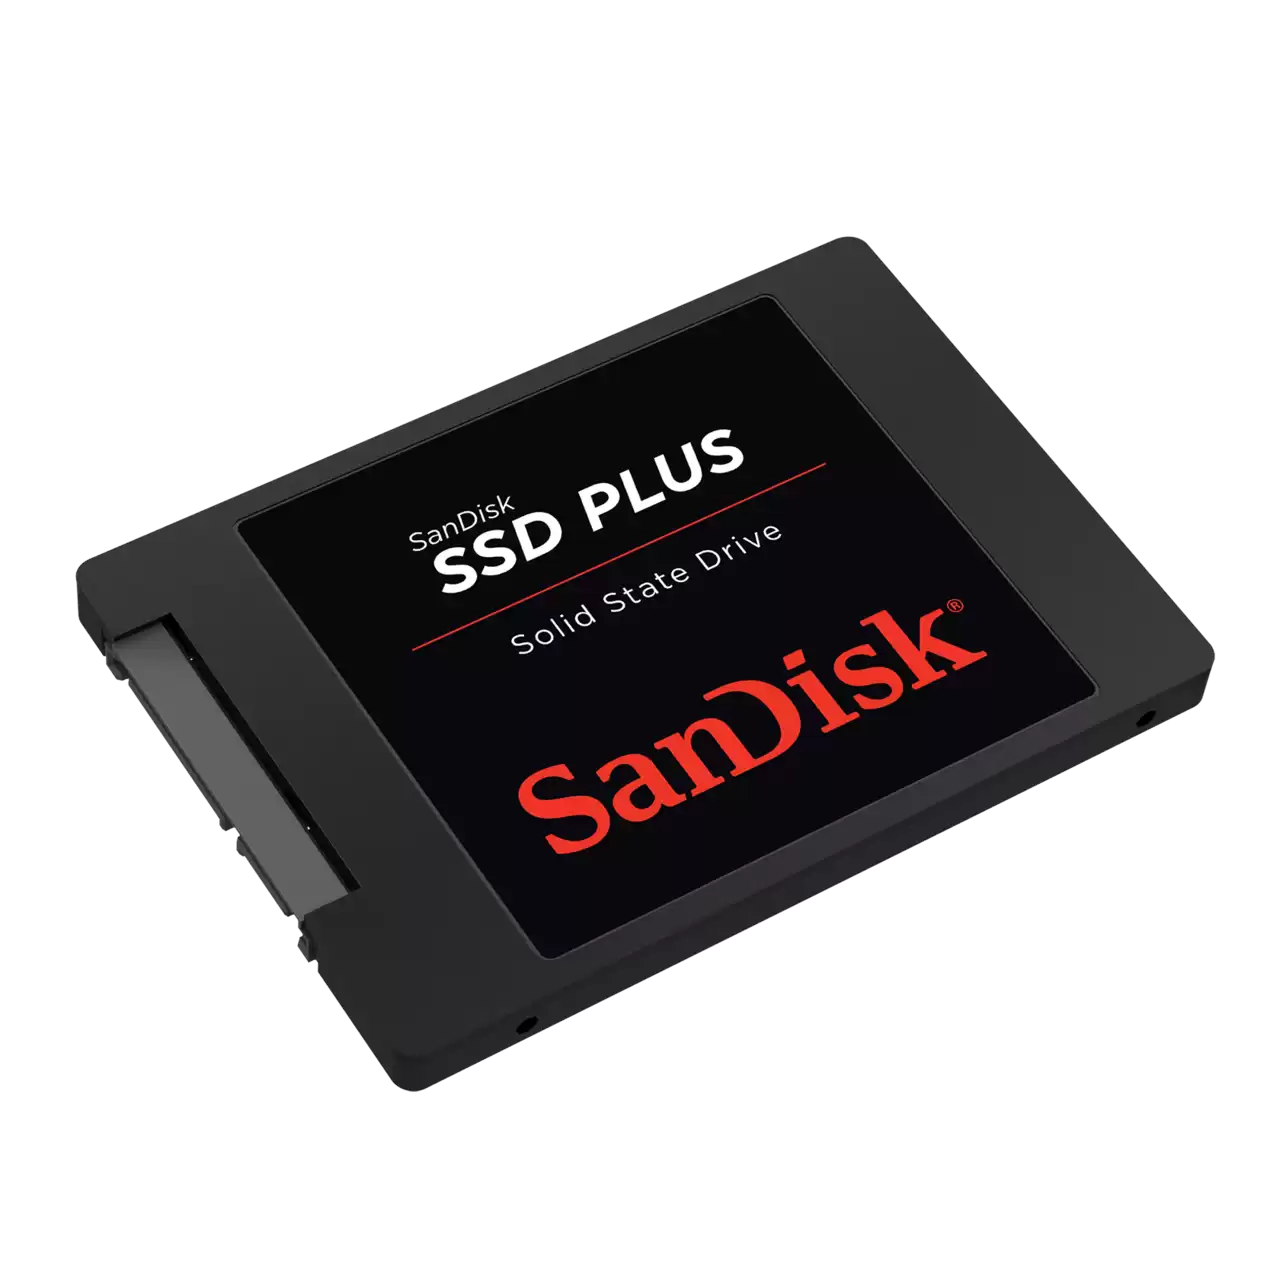 SanDisk 480GB SSD Plus 2.5